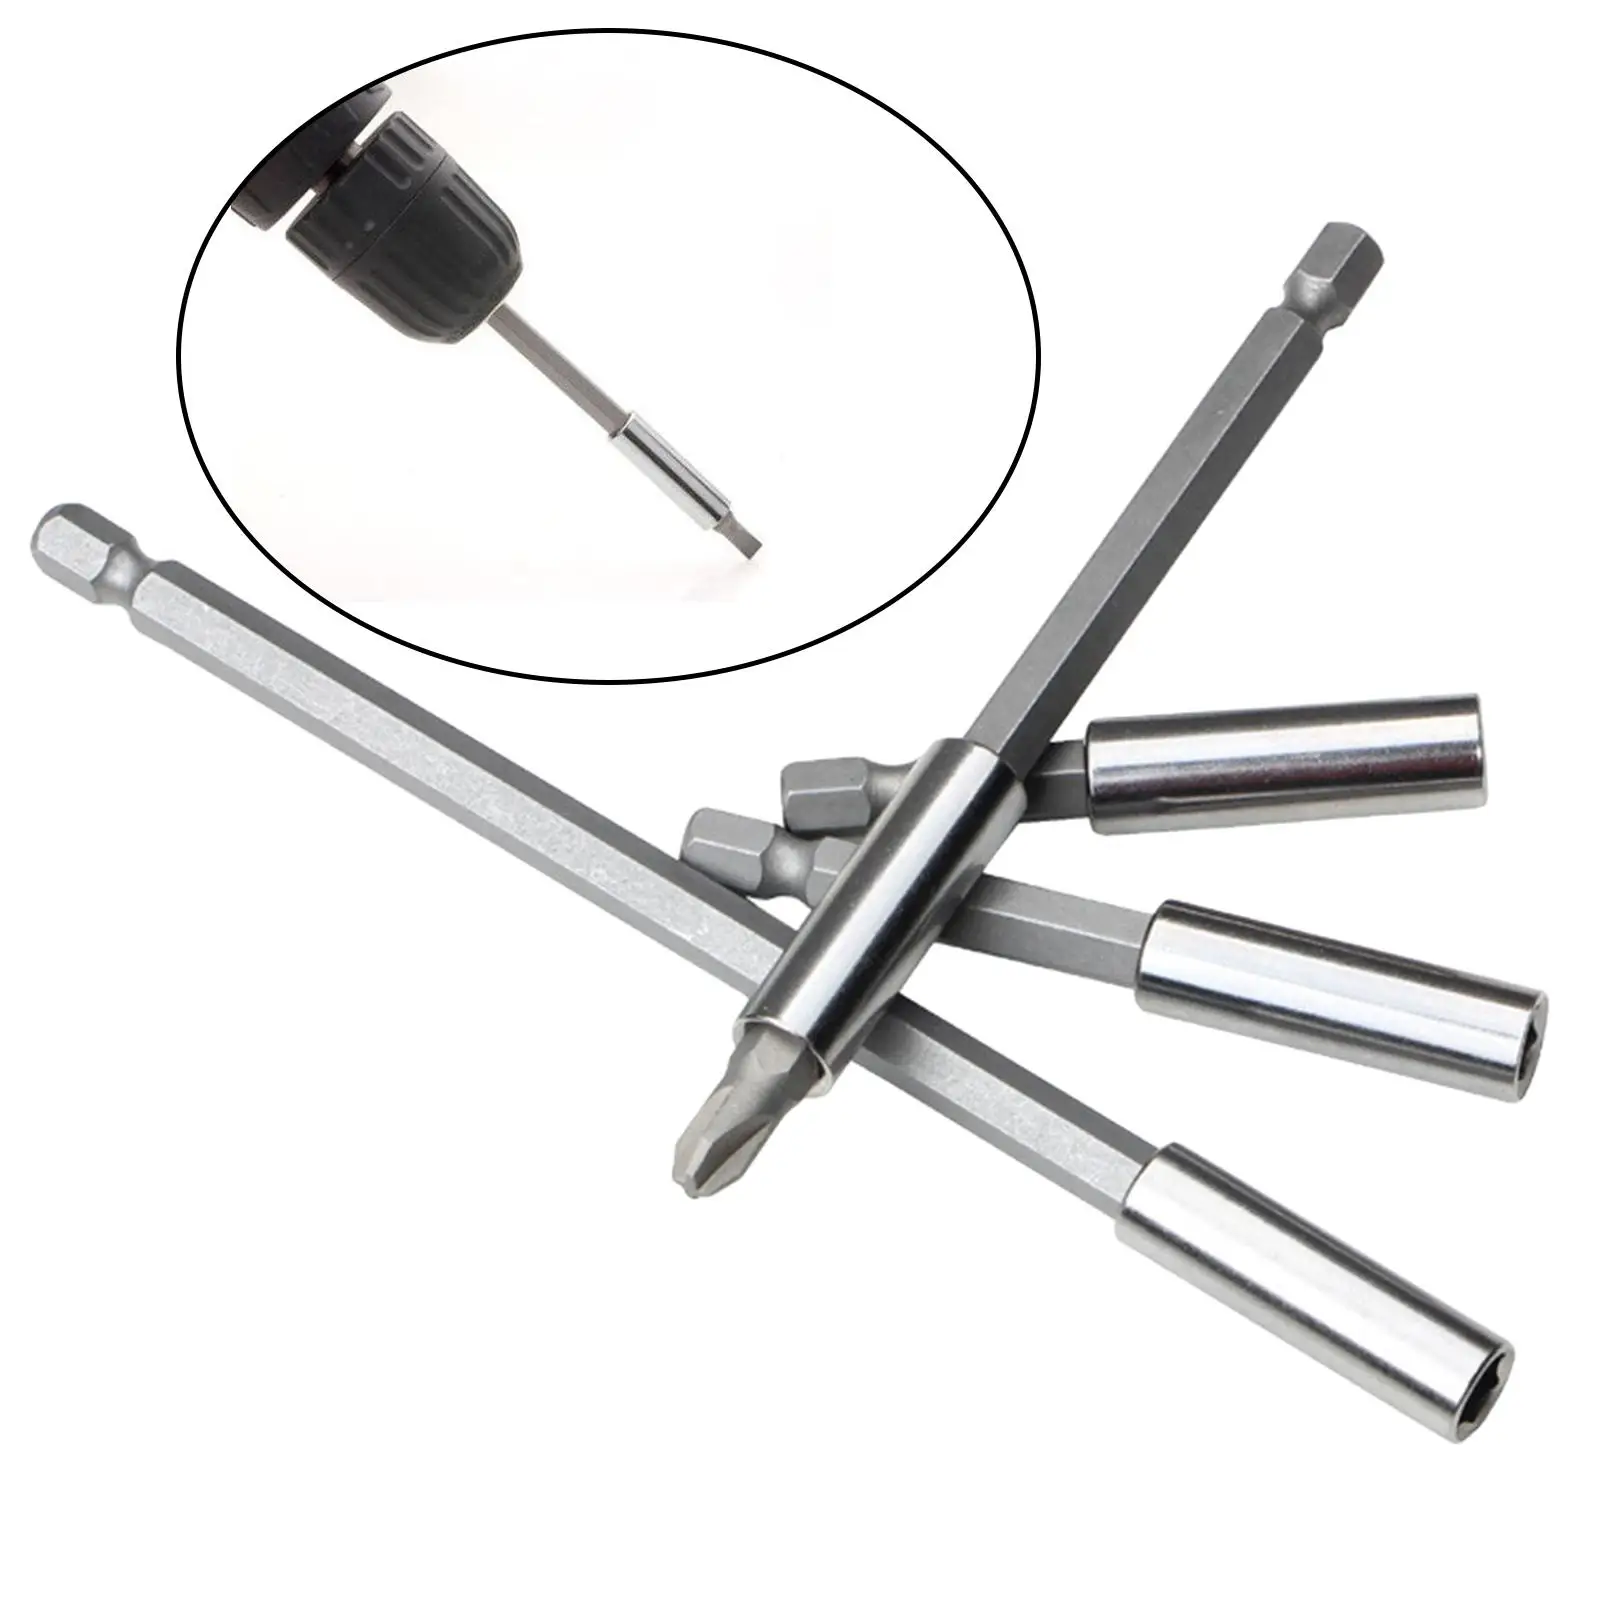 Screwdriver Head Extension Rod Socket Adapter Adapter Extension Sleeve Extension Rod for Cordless Drill Pneumatic Air Batch